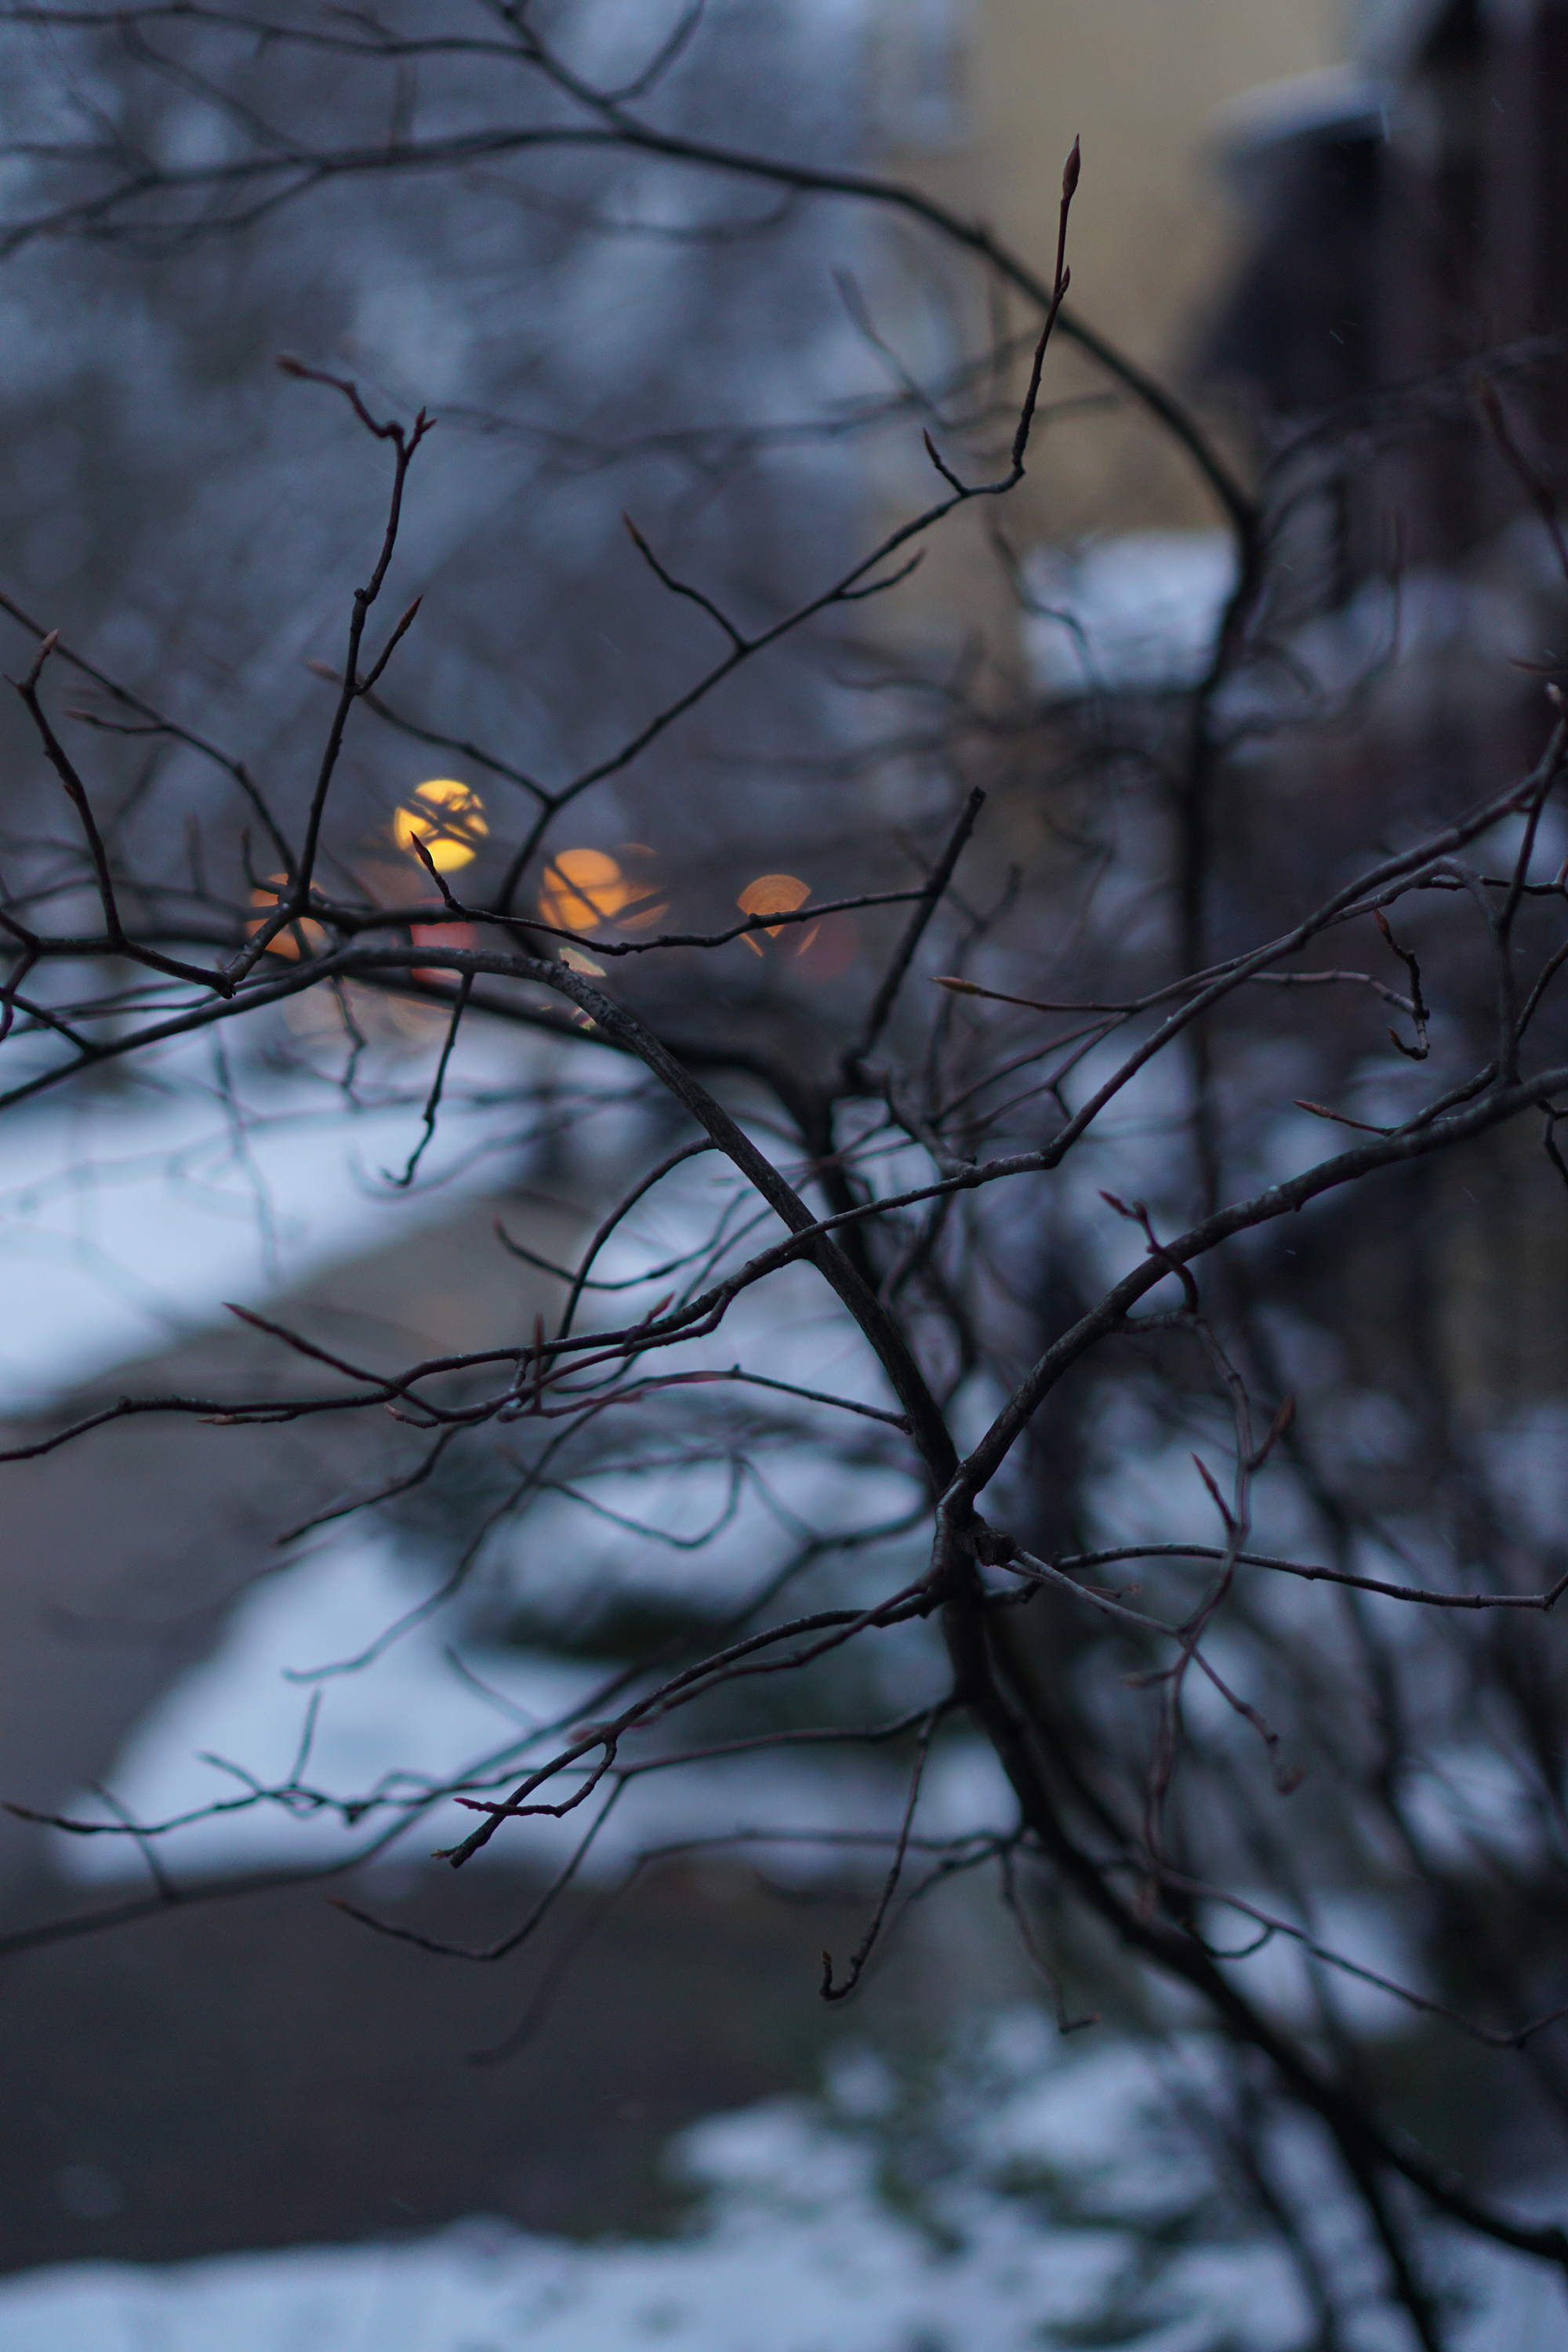 Serviceberry tree in winter, Chicago IL / Darker than Green